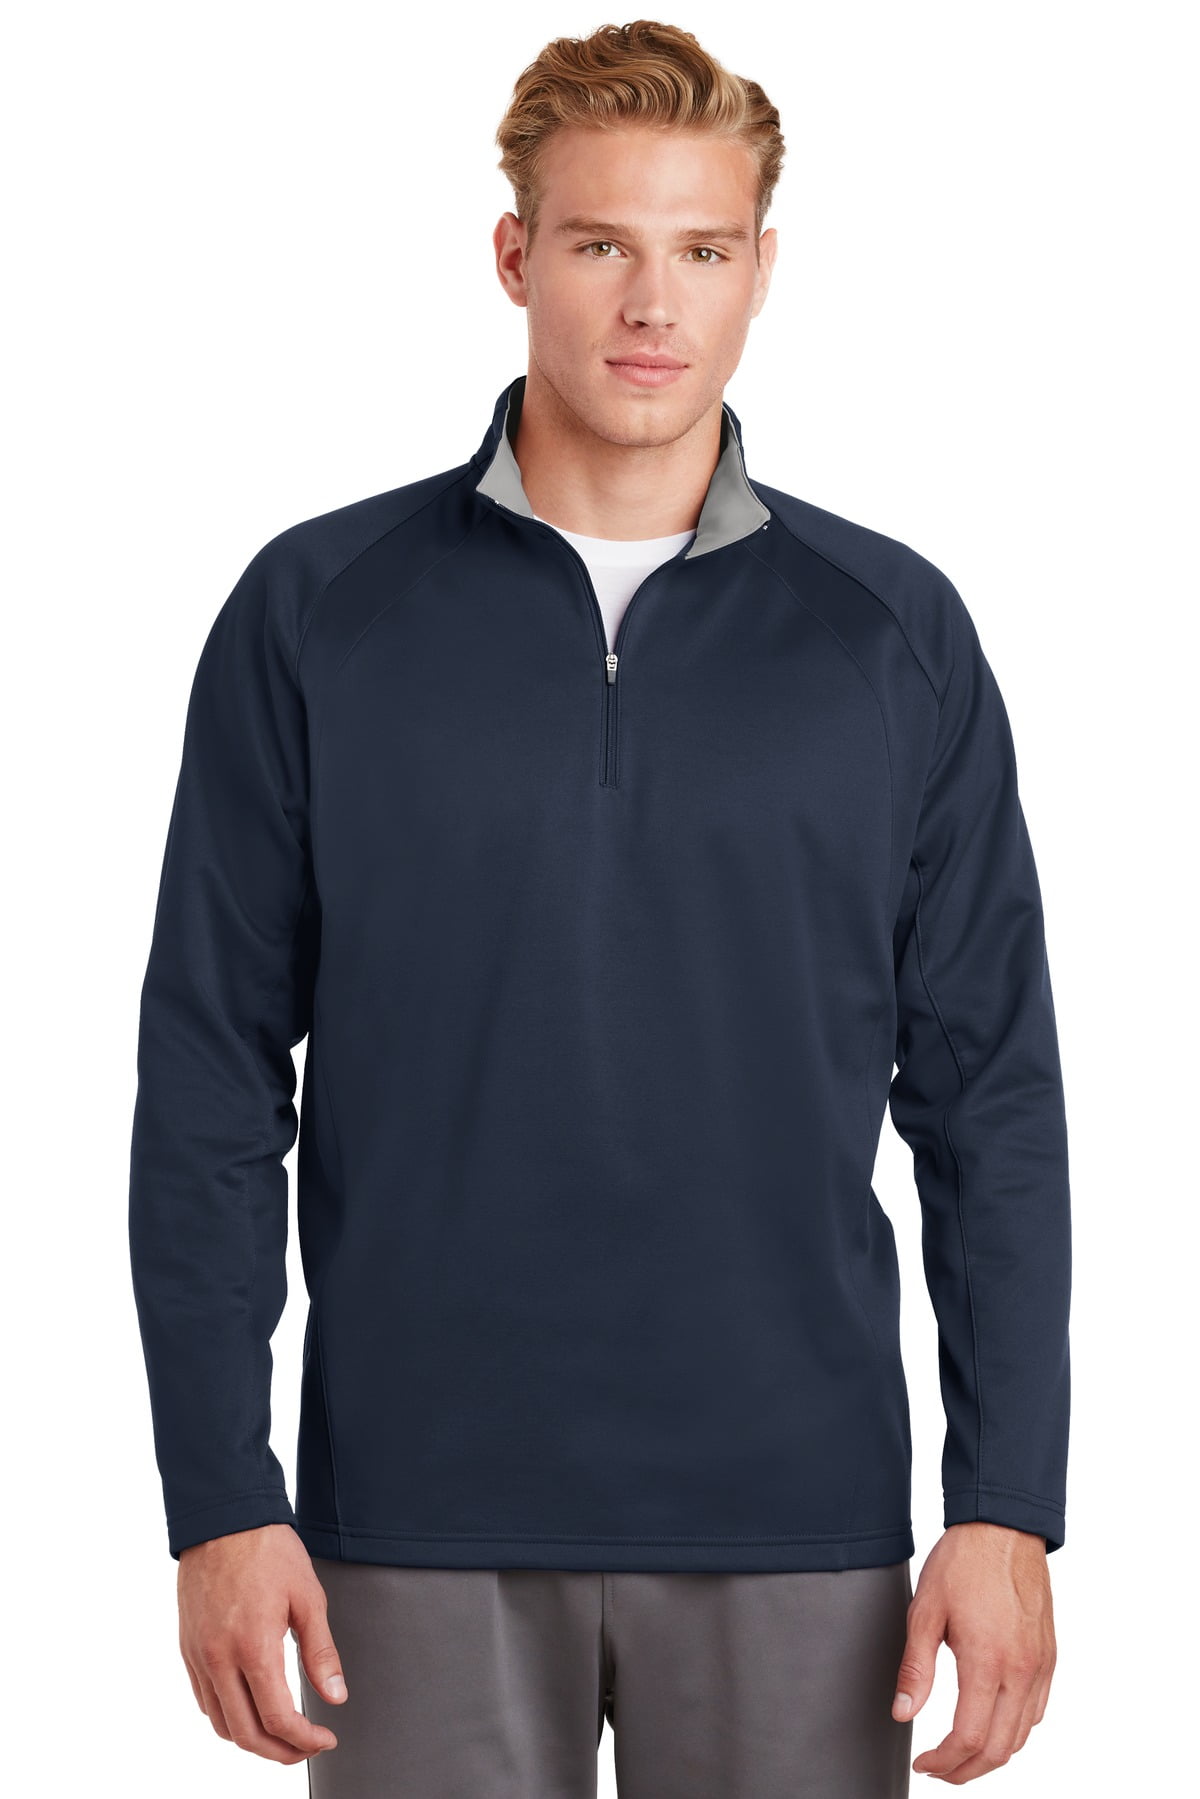 Mens 1/2 Zip Pullover Sweater Polar Microfleece Open Bottom Jacket XS-2X 3XL 4XL 